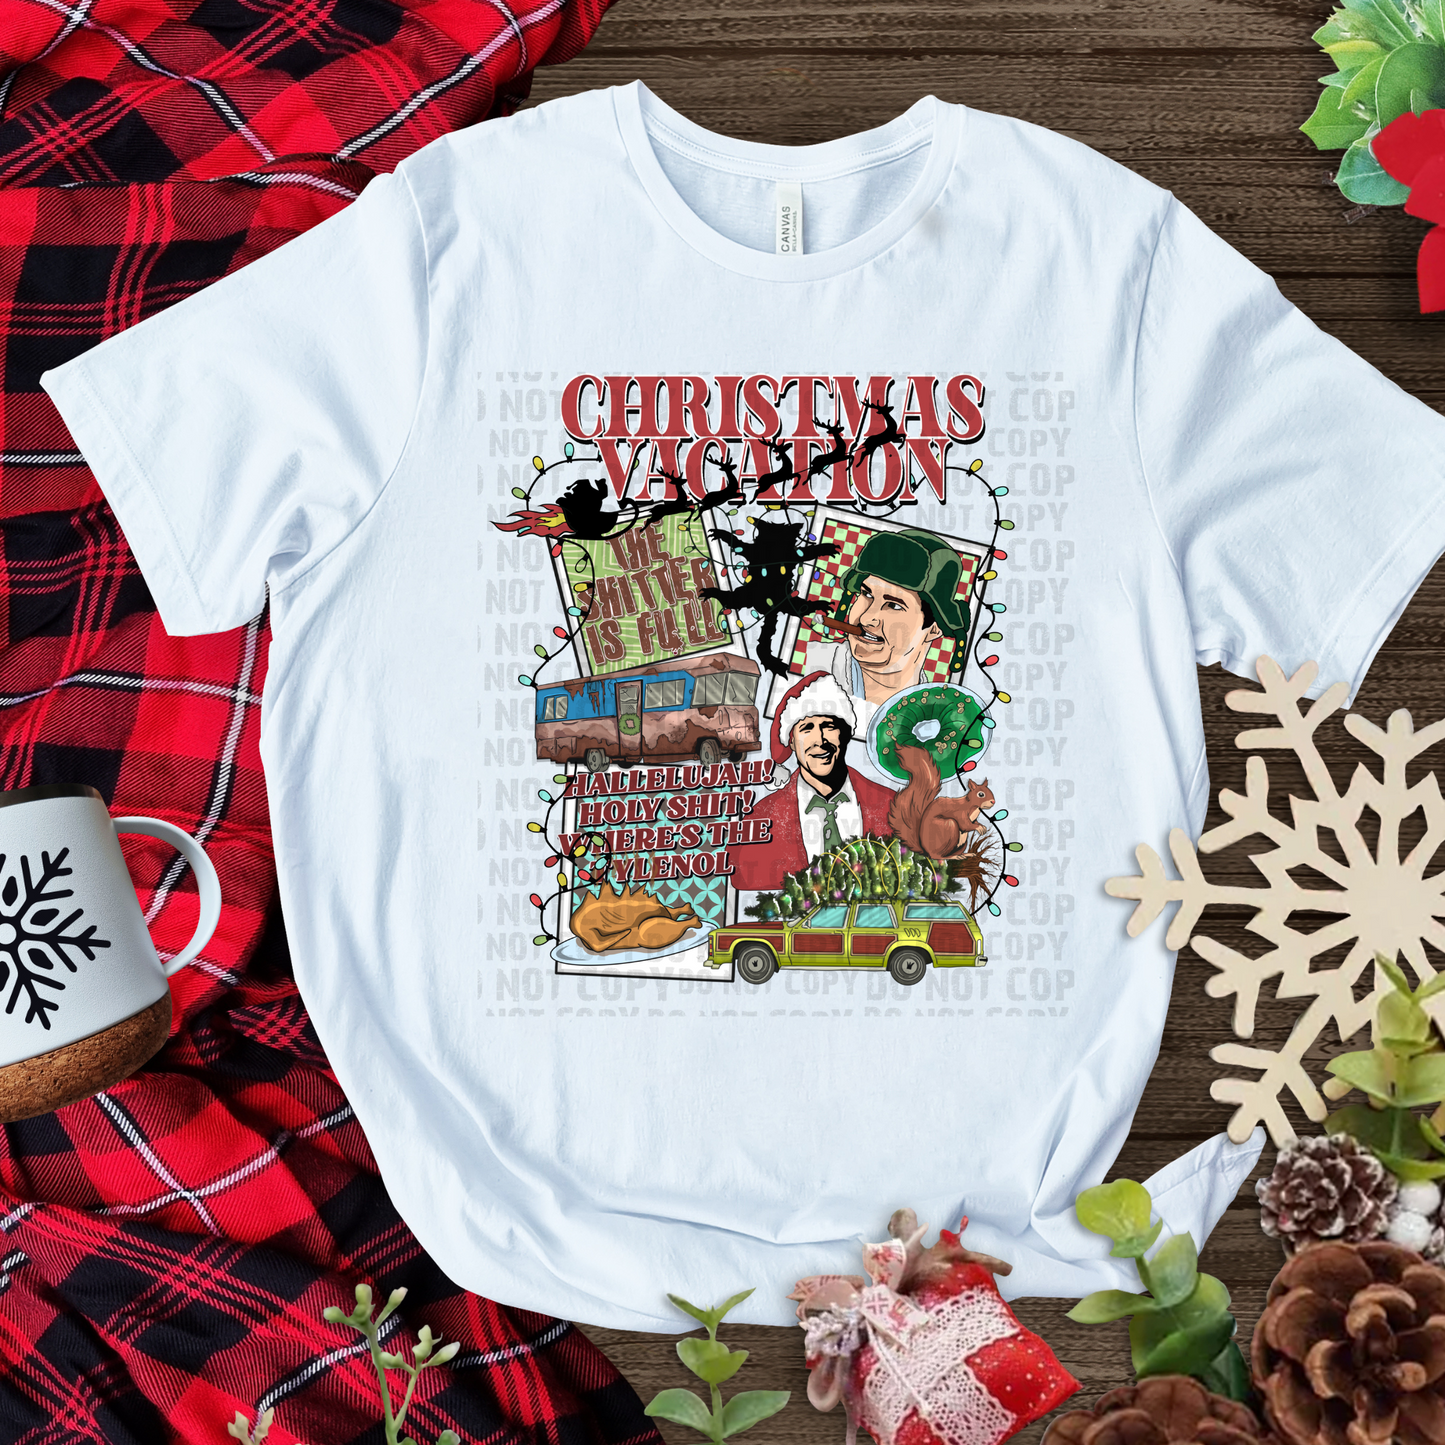 Christmas Vacation T-Shirt | Trendy Christmas Shirt | Fast Shipping | Super Soft Shirts for Women/Kid's